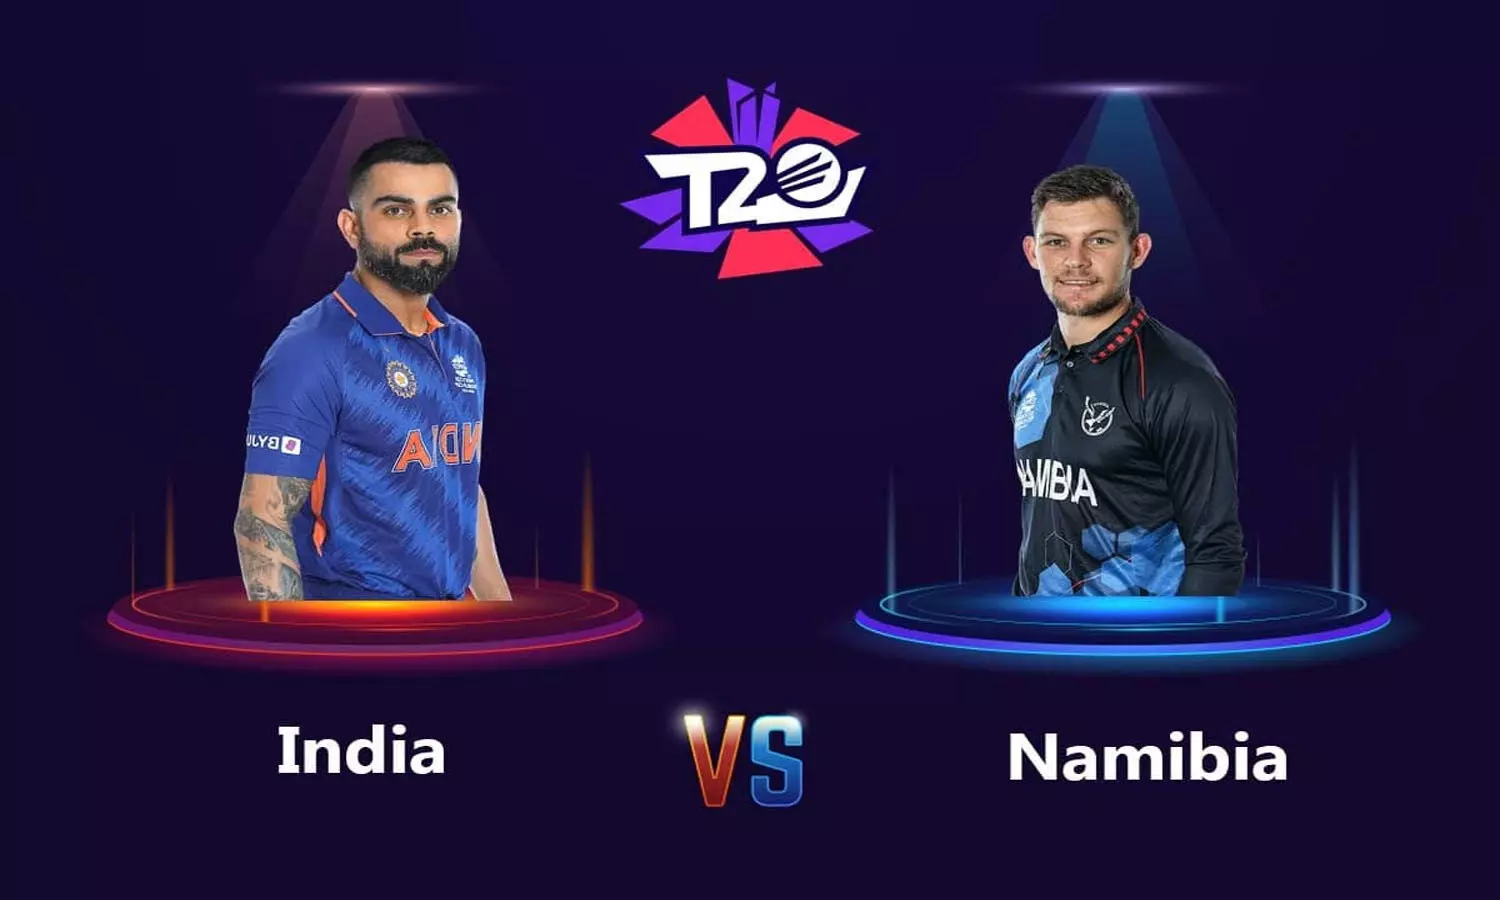 India vs Namibia